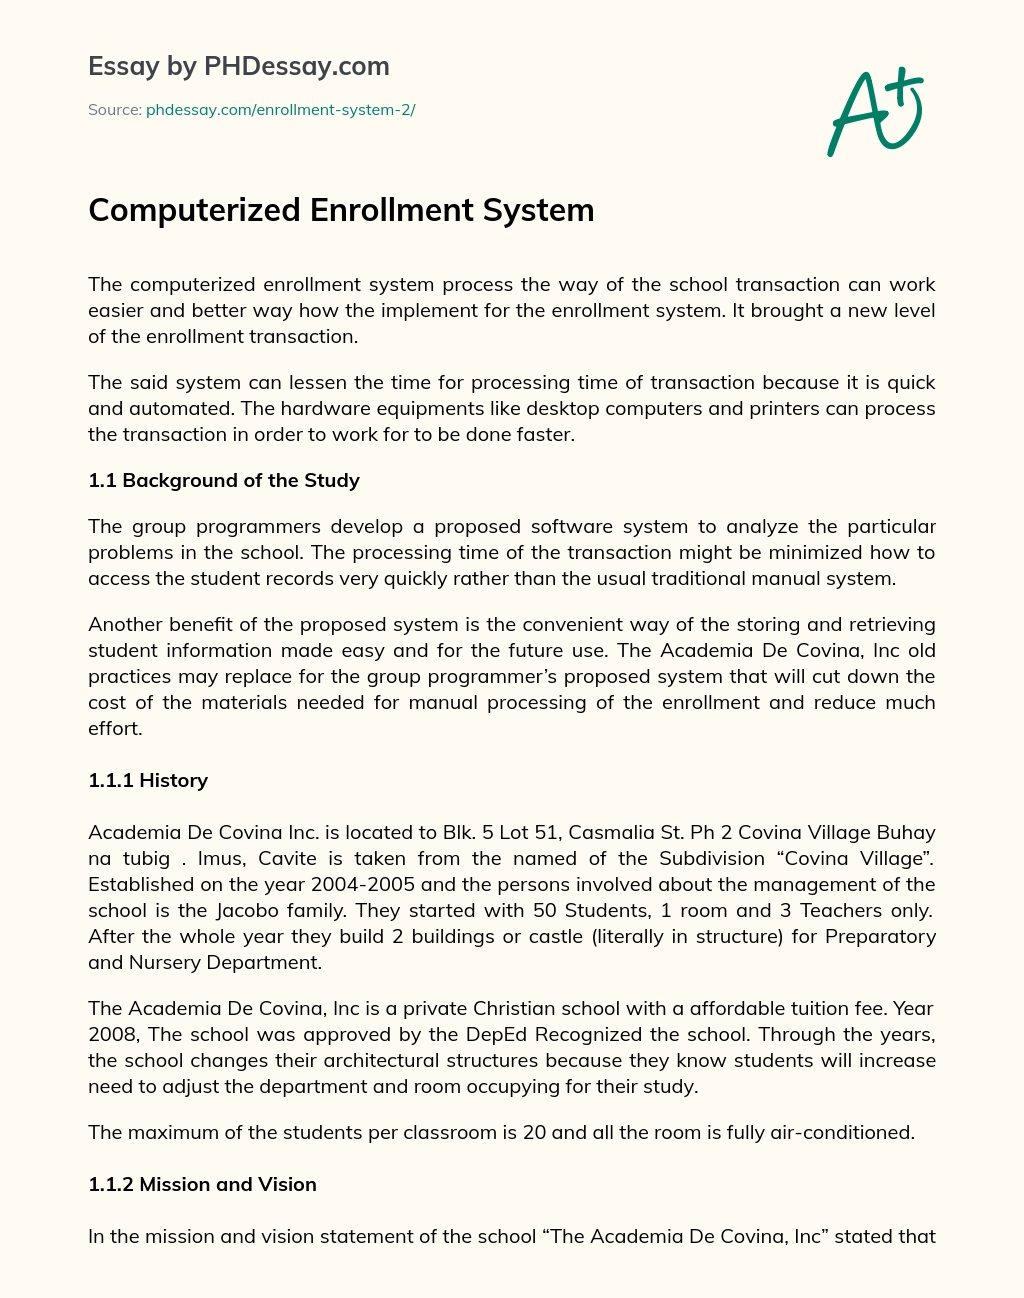 Computerized Enrollment System essay